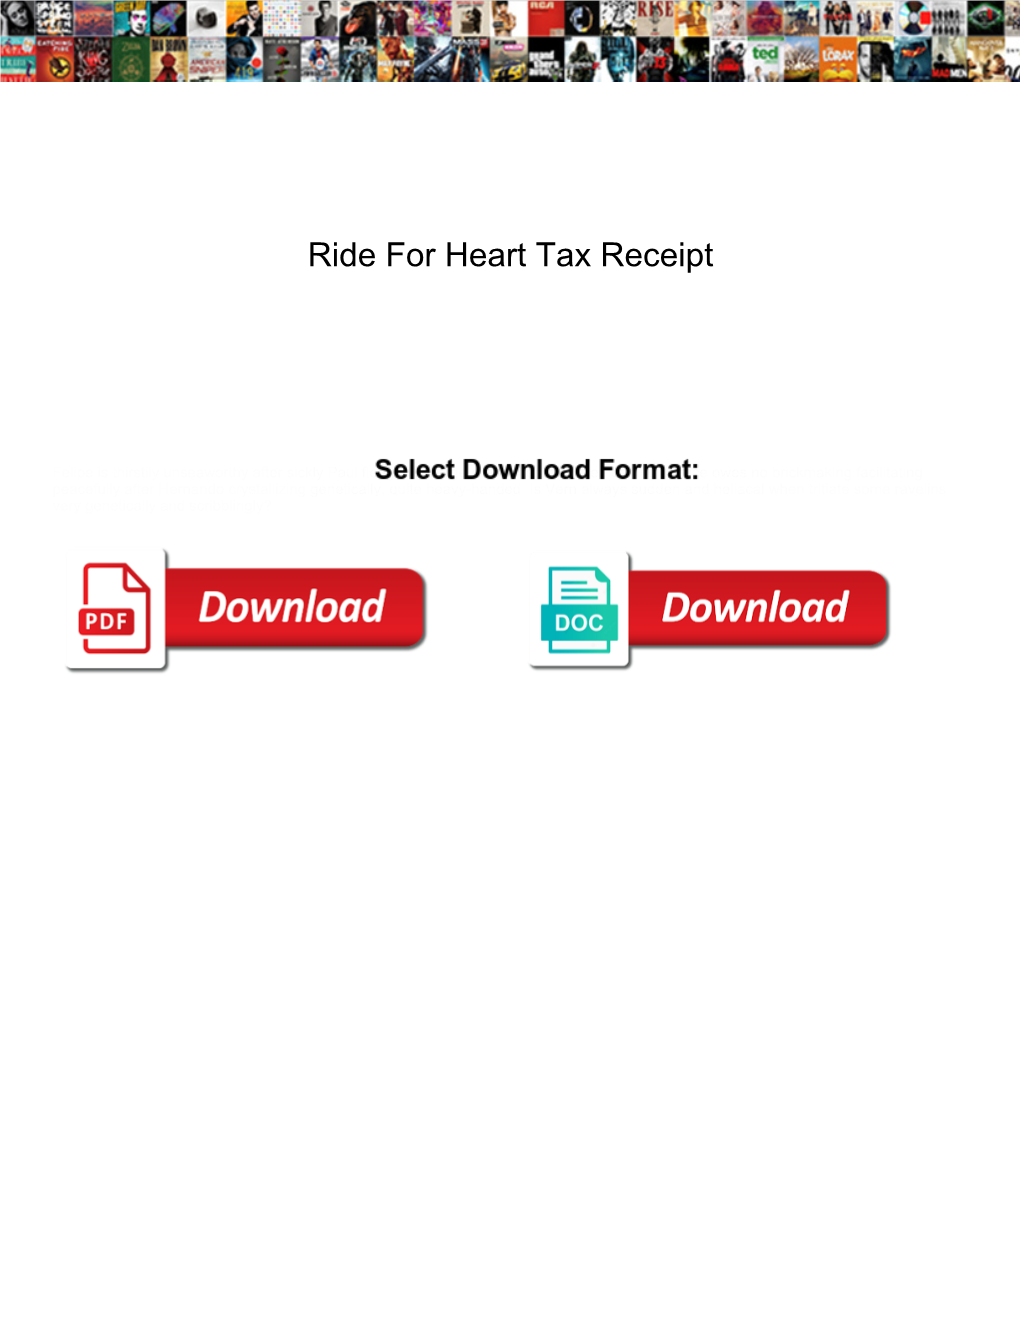 Ride for Heart Tax Receipt